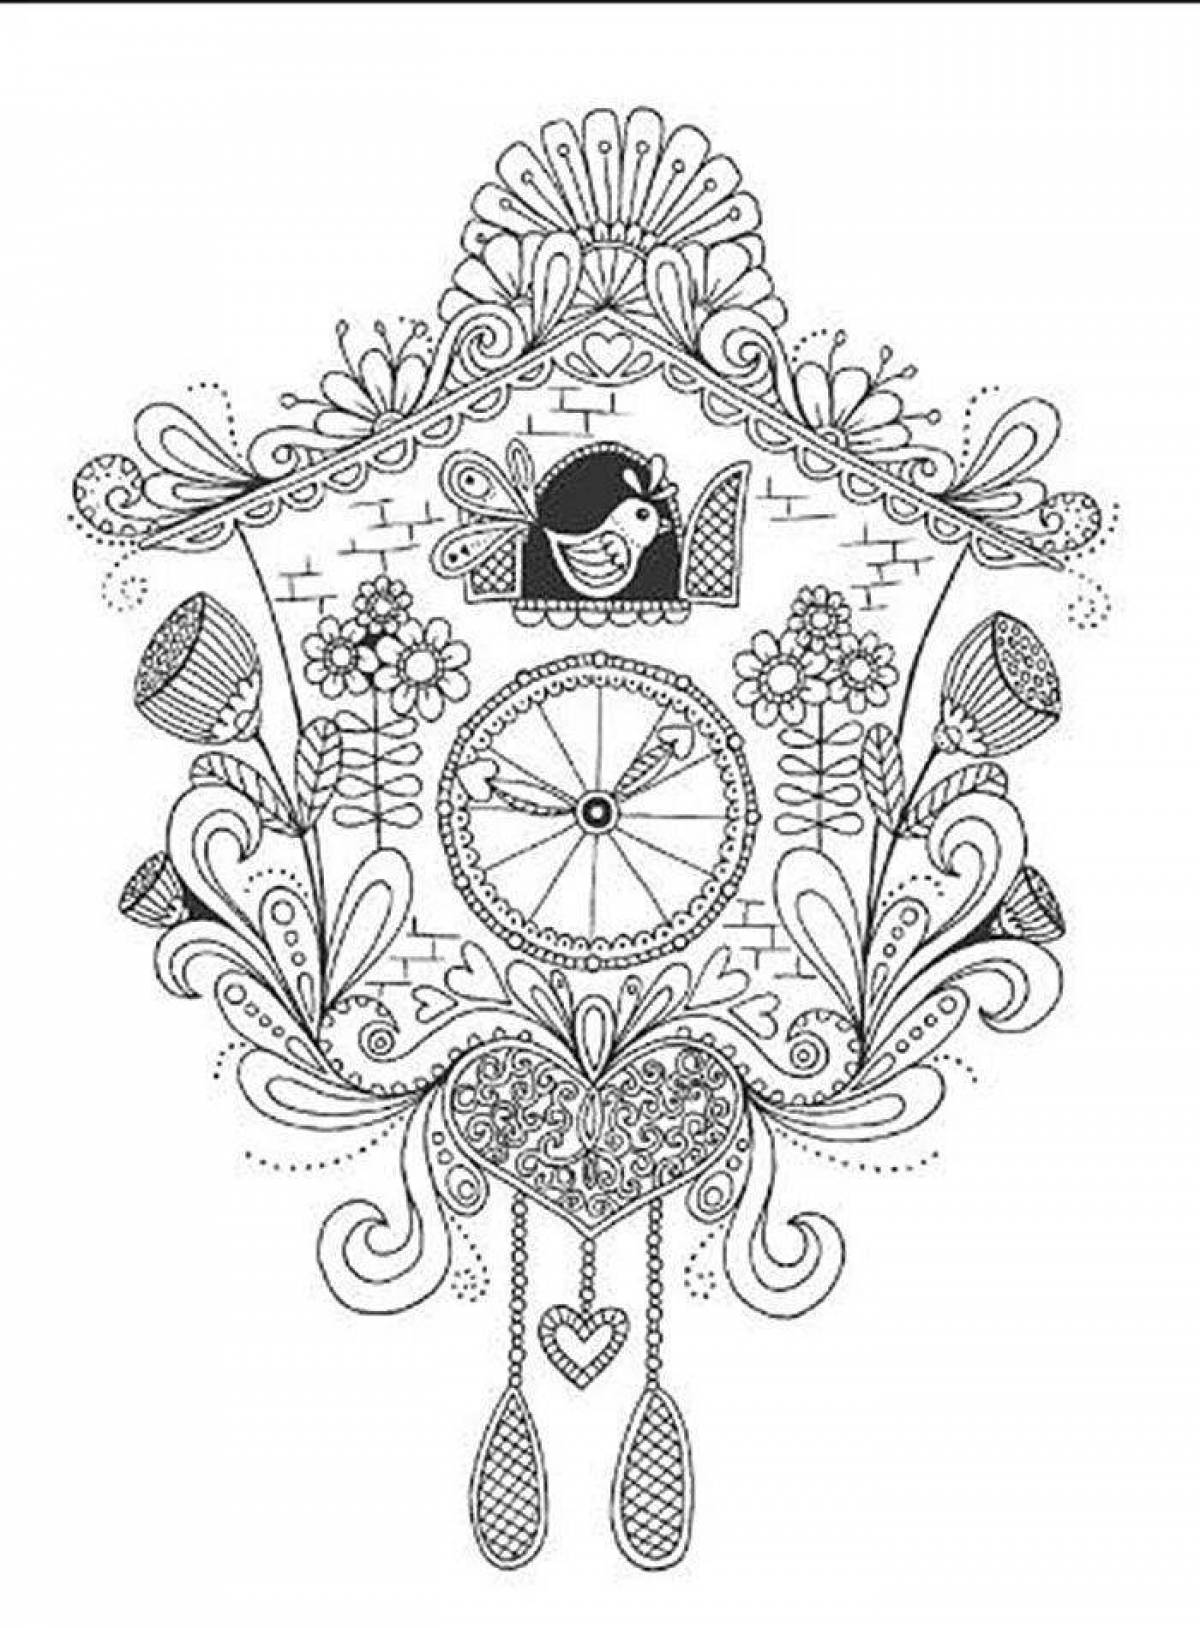 Fairy cuckoo clock coloring page